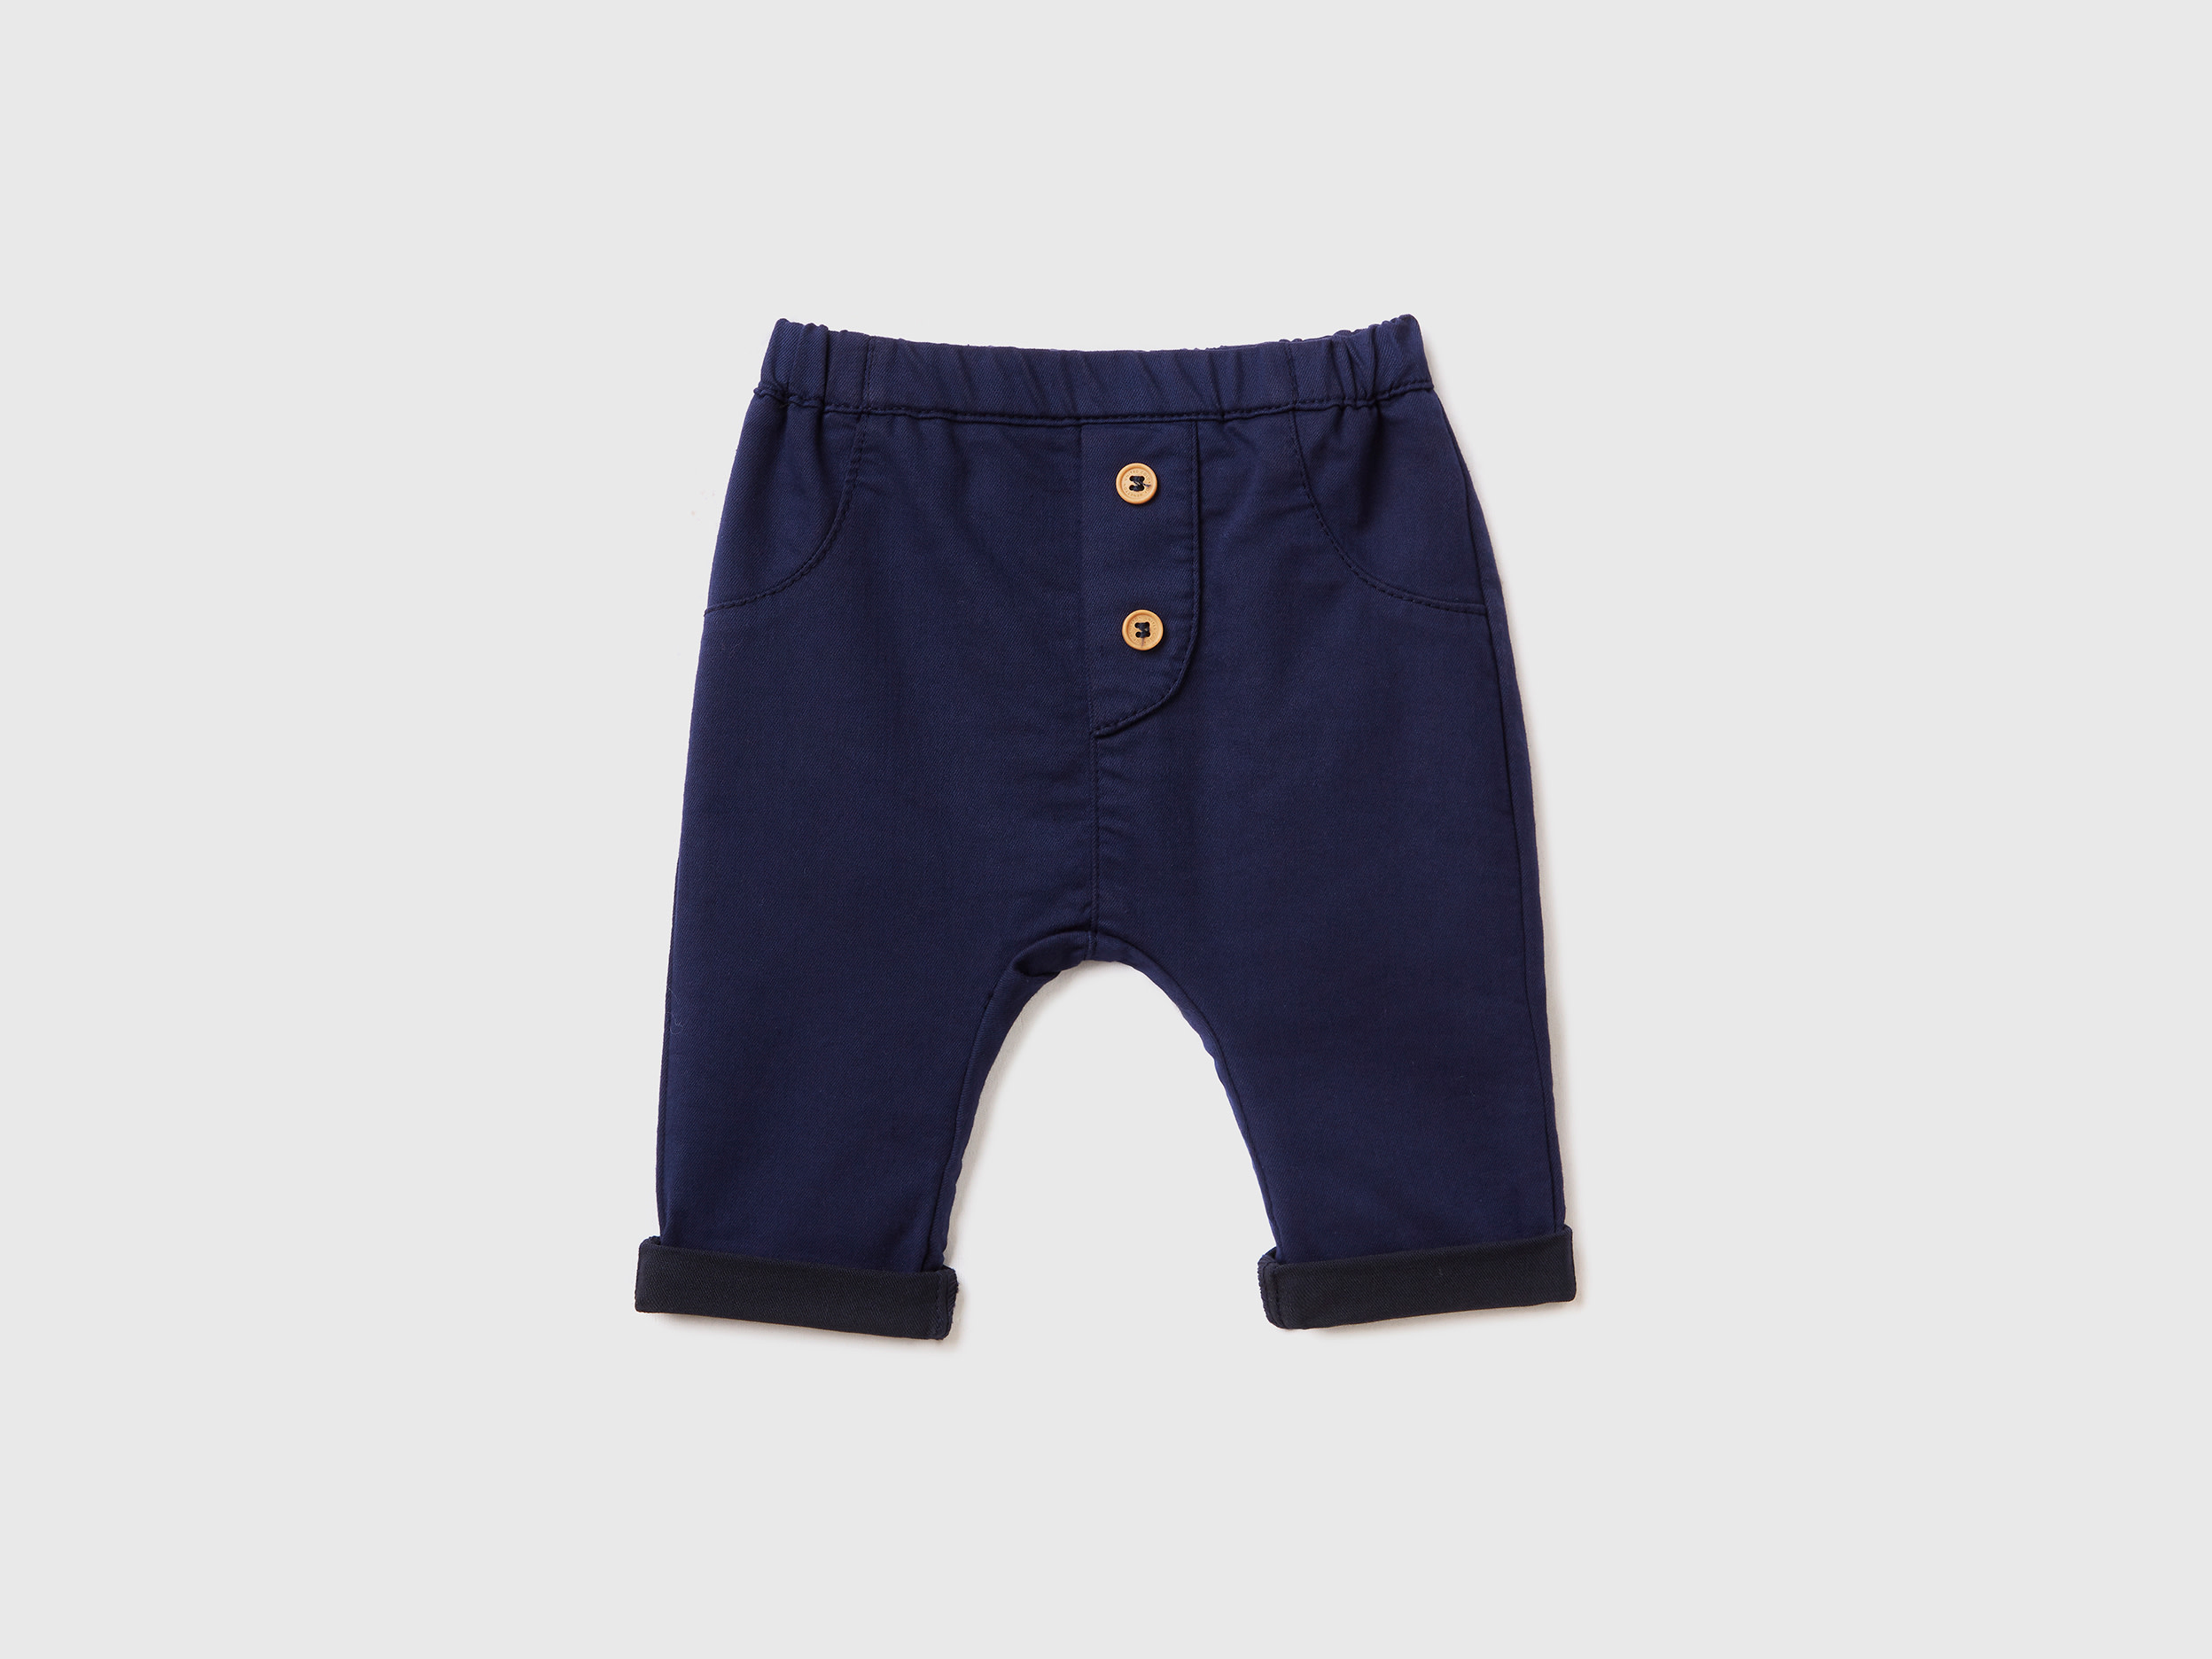 Benetton, Trousers In Stretch Cotton Blend, size 9-12, Dark Blue, Kids